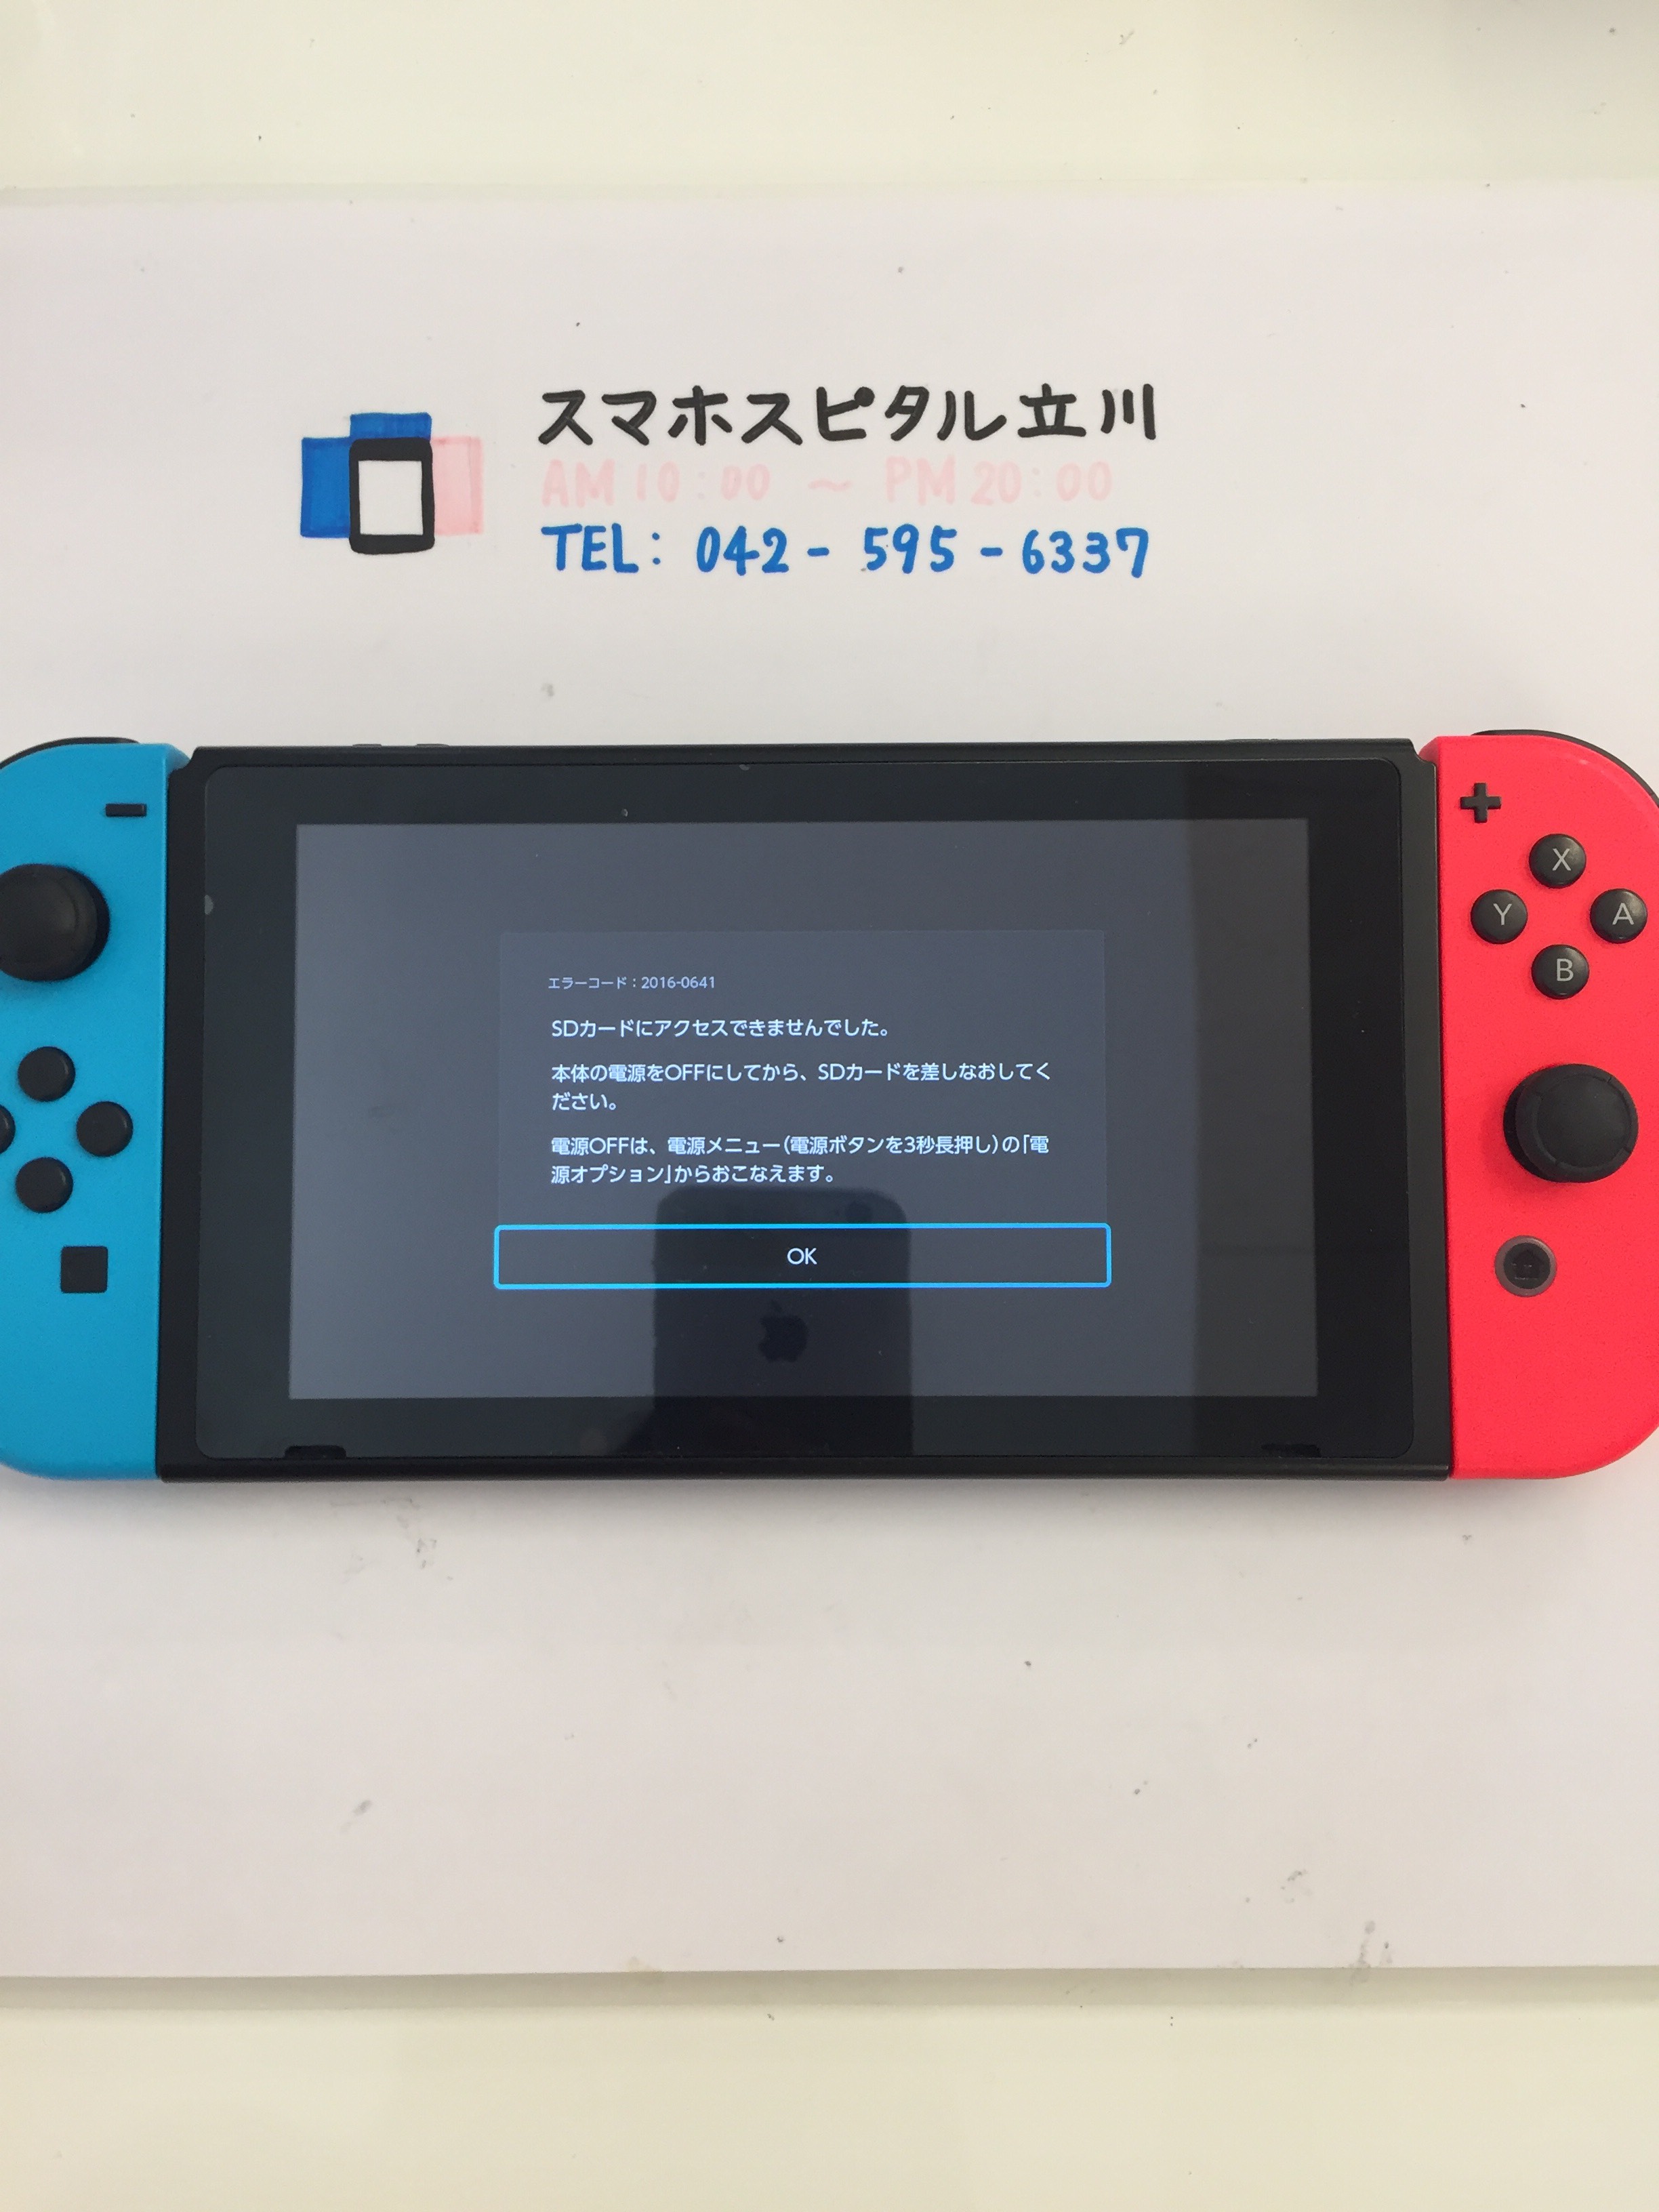 Nintendo Switch Sdカードを差し込むとエラーが発生 アクセス拒否されるsdの修理 Nintendo3ds Switch Psp 修理のゲームホスピタル Nintendo3ds ニンテンドーds Psp 修理